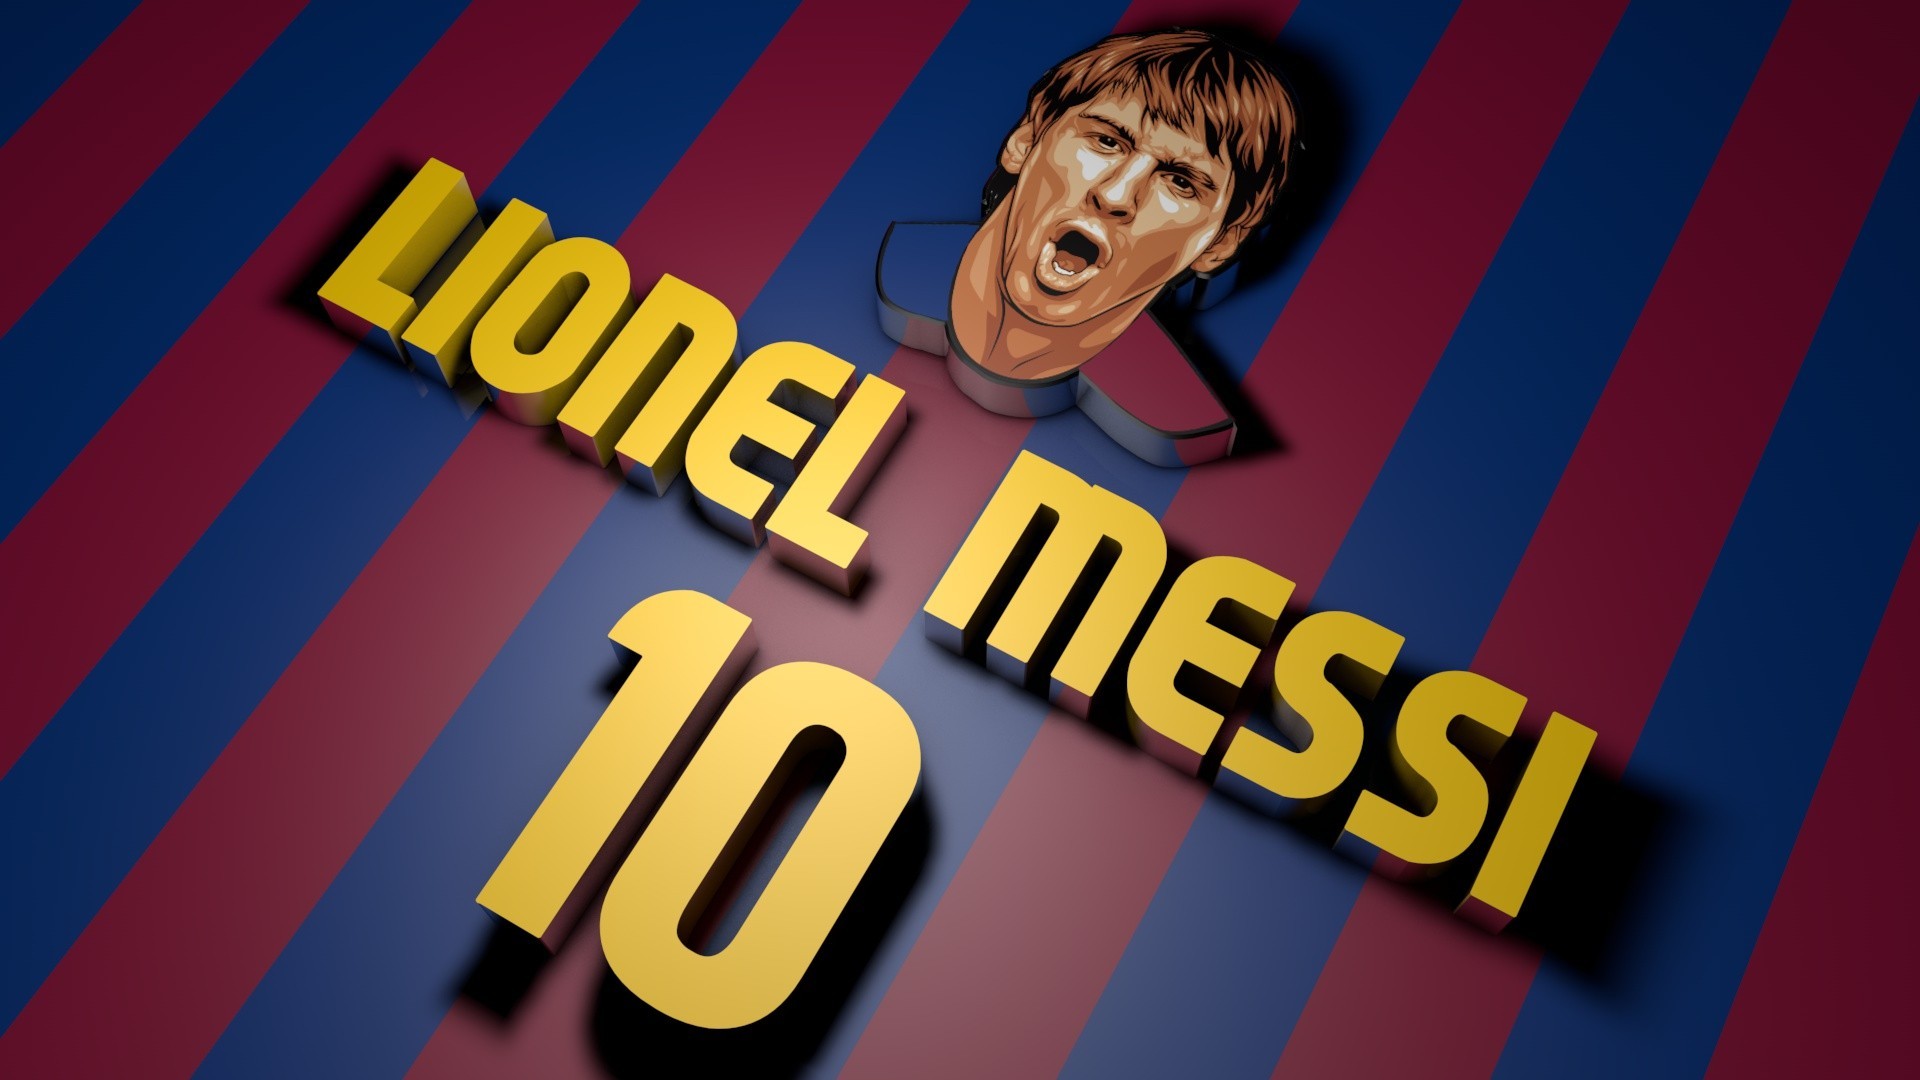 Lionel Messi 10 HD Desktop Mobile Wallpaper Background   9walls